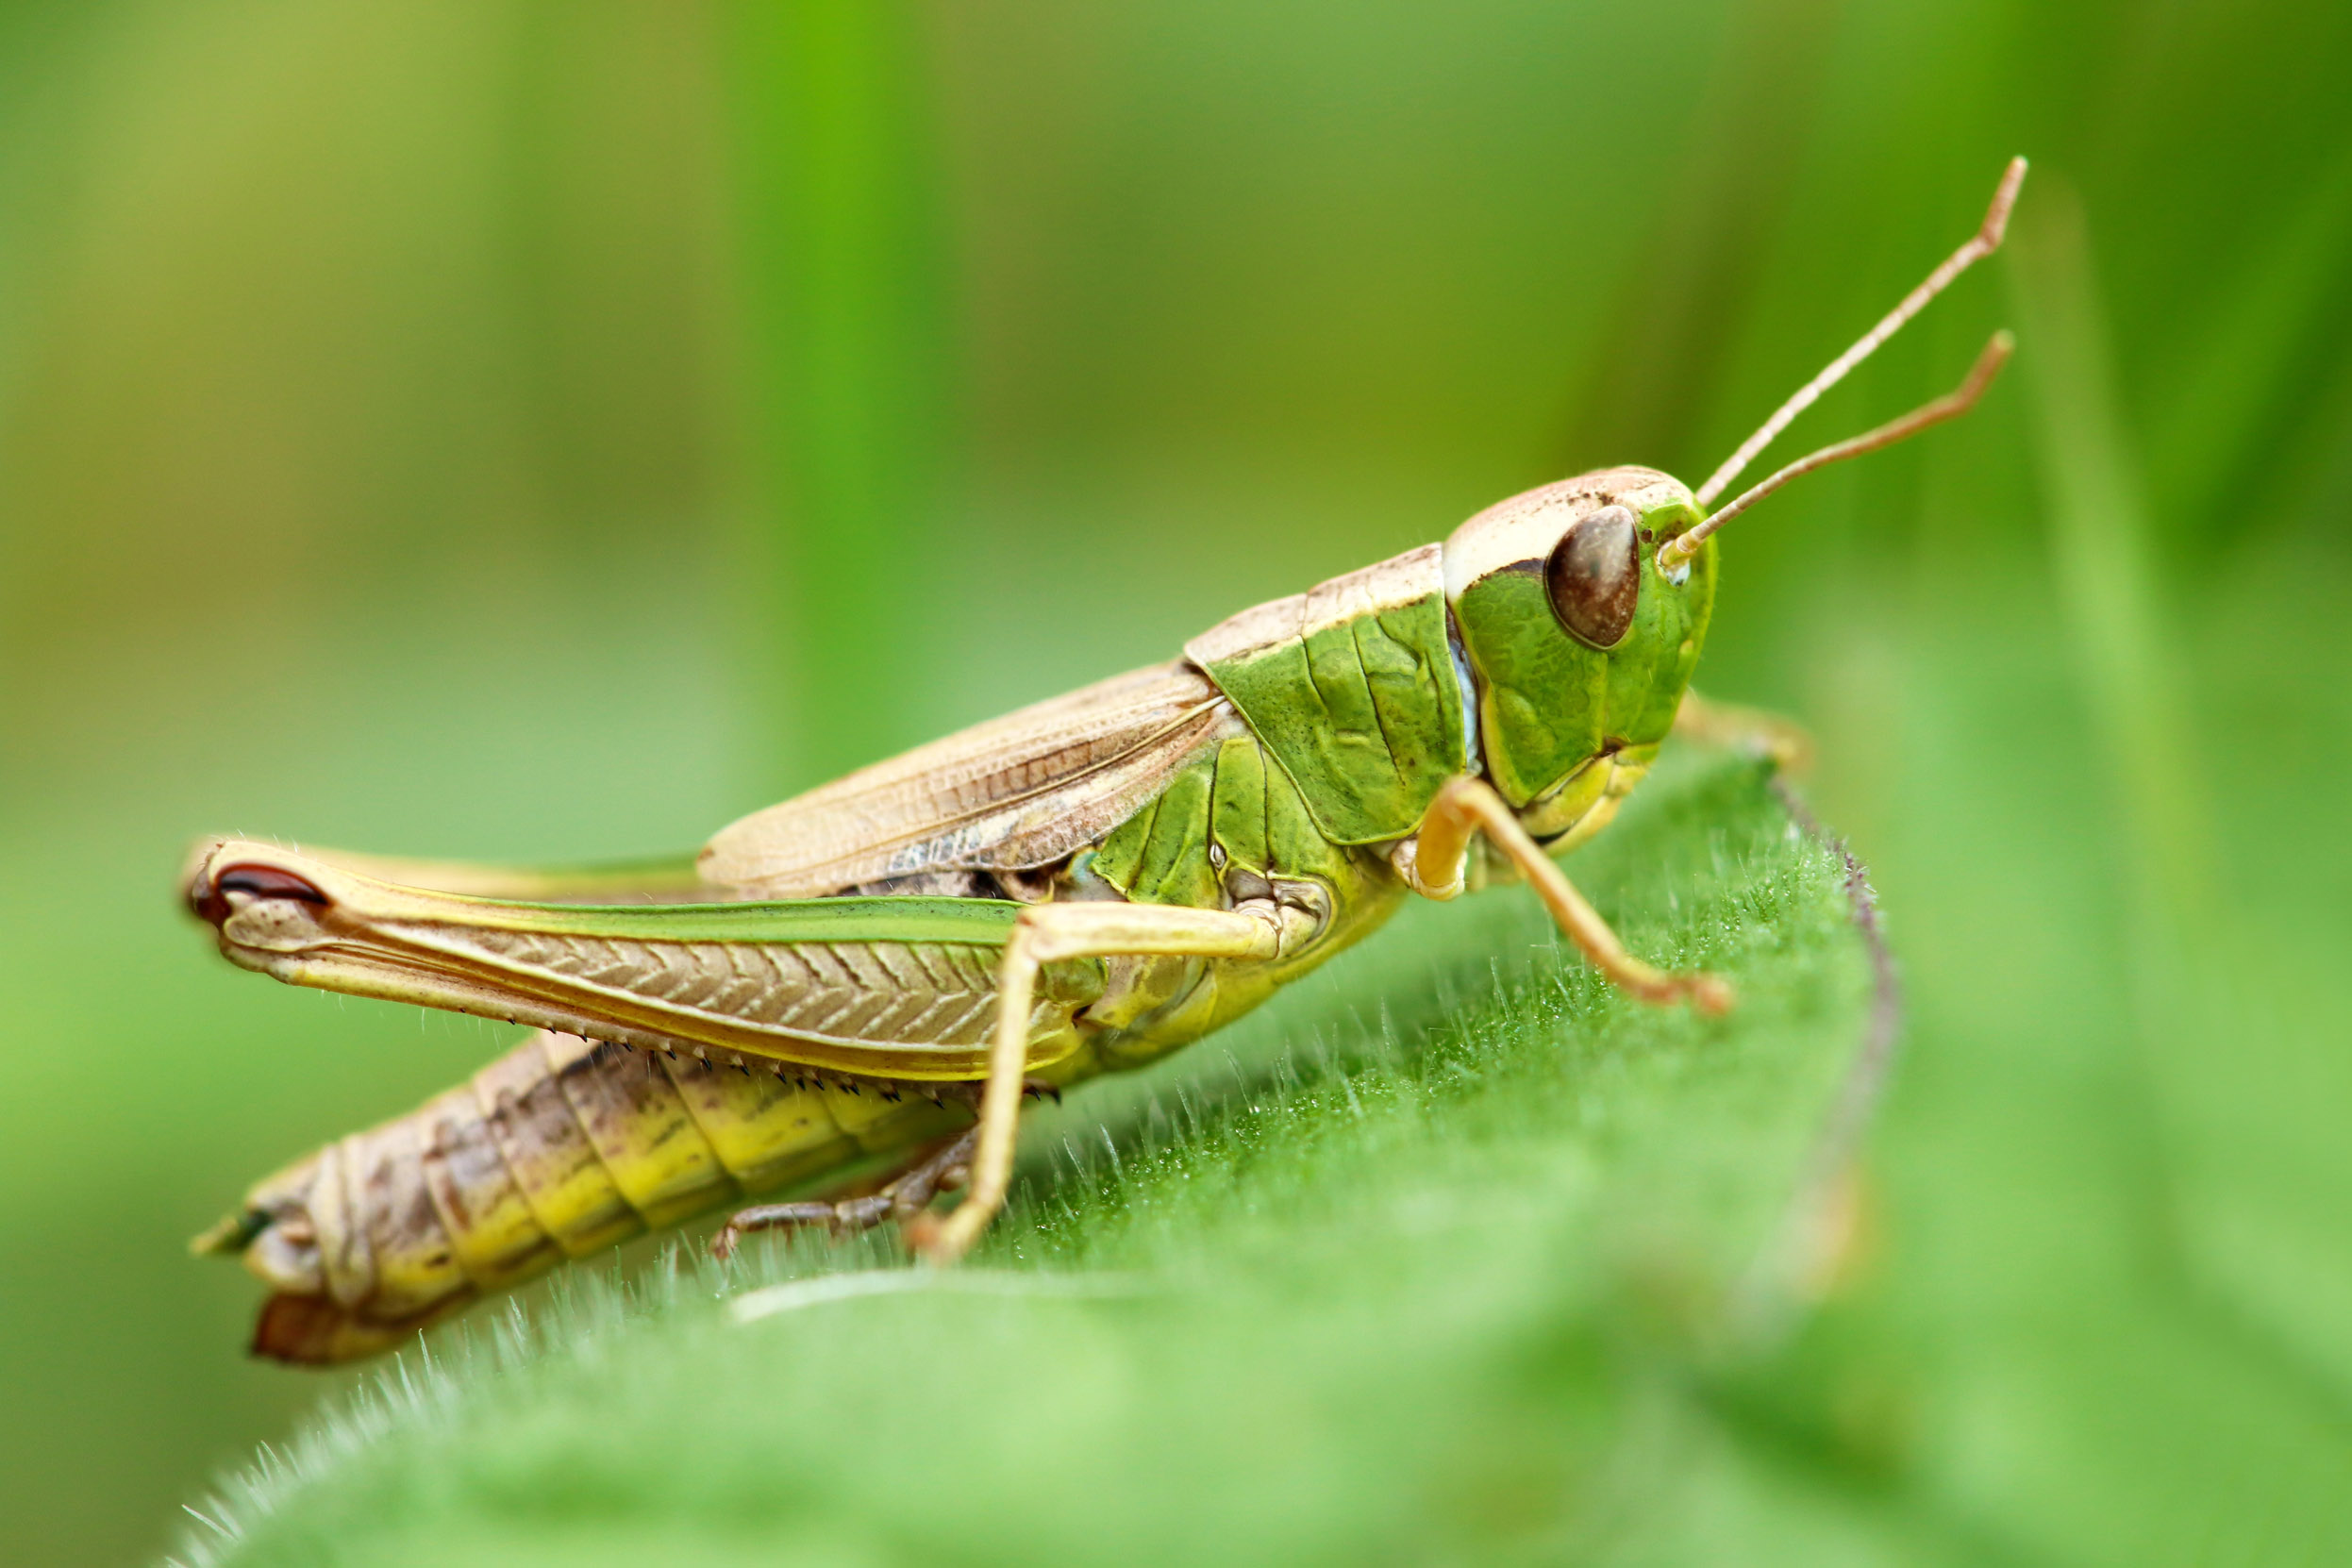 A lone Meadow Grasshopper perched on a green leaf.